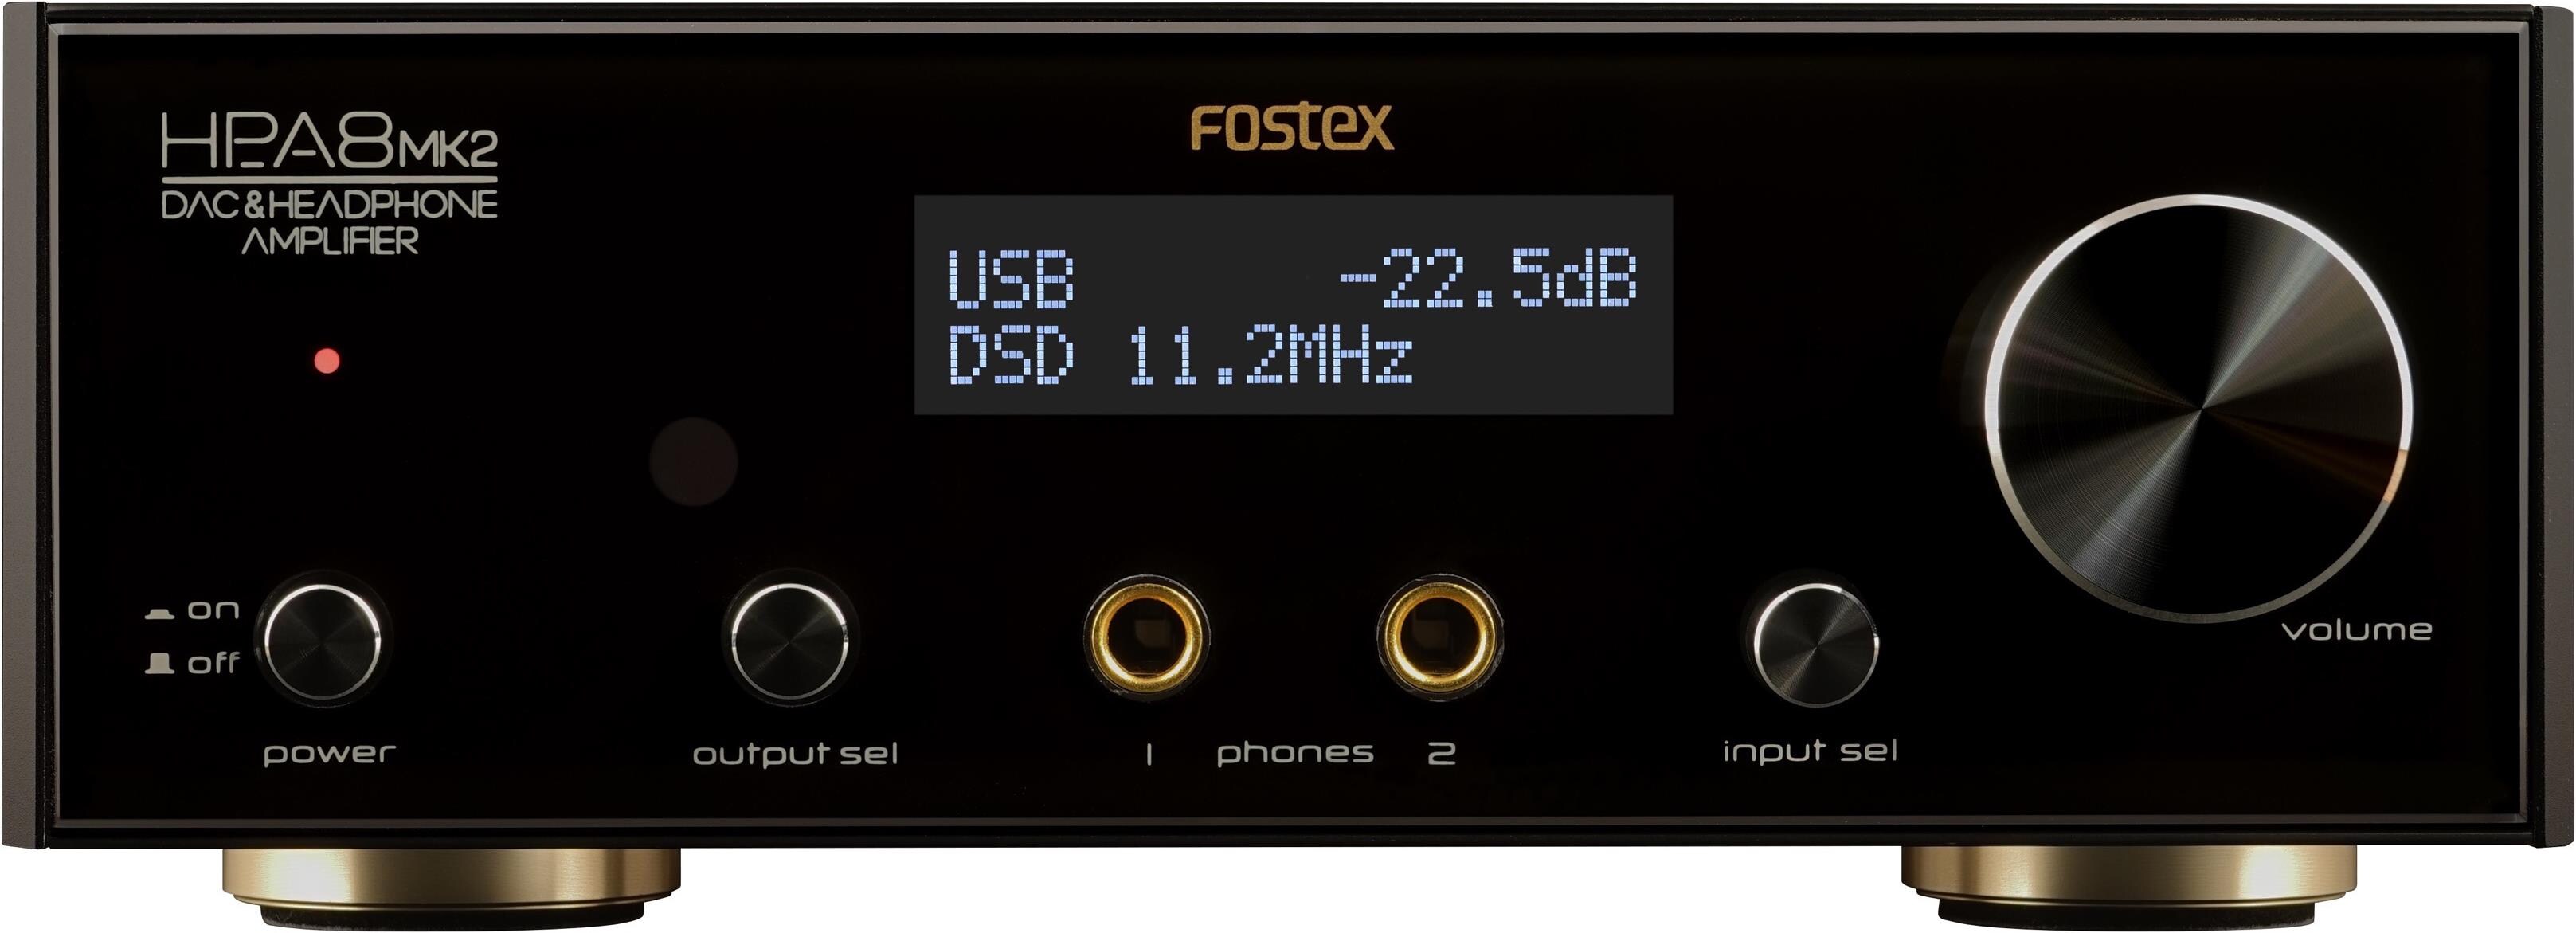 Fostex HP-A8mk2 (Display, USB-DAC, Audio player) - buy at digitec